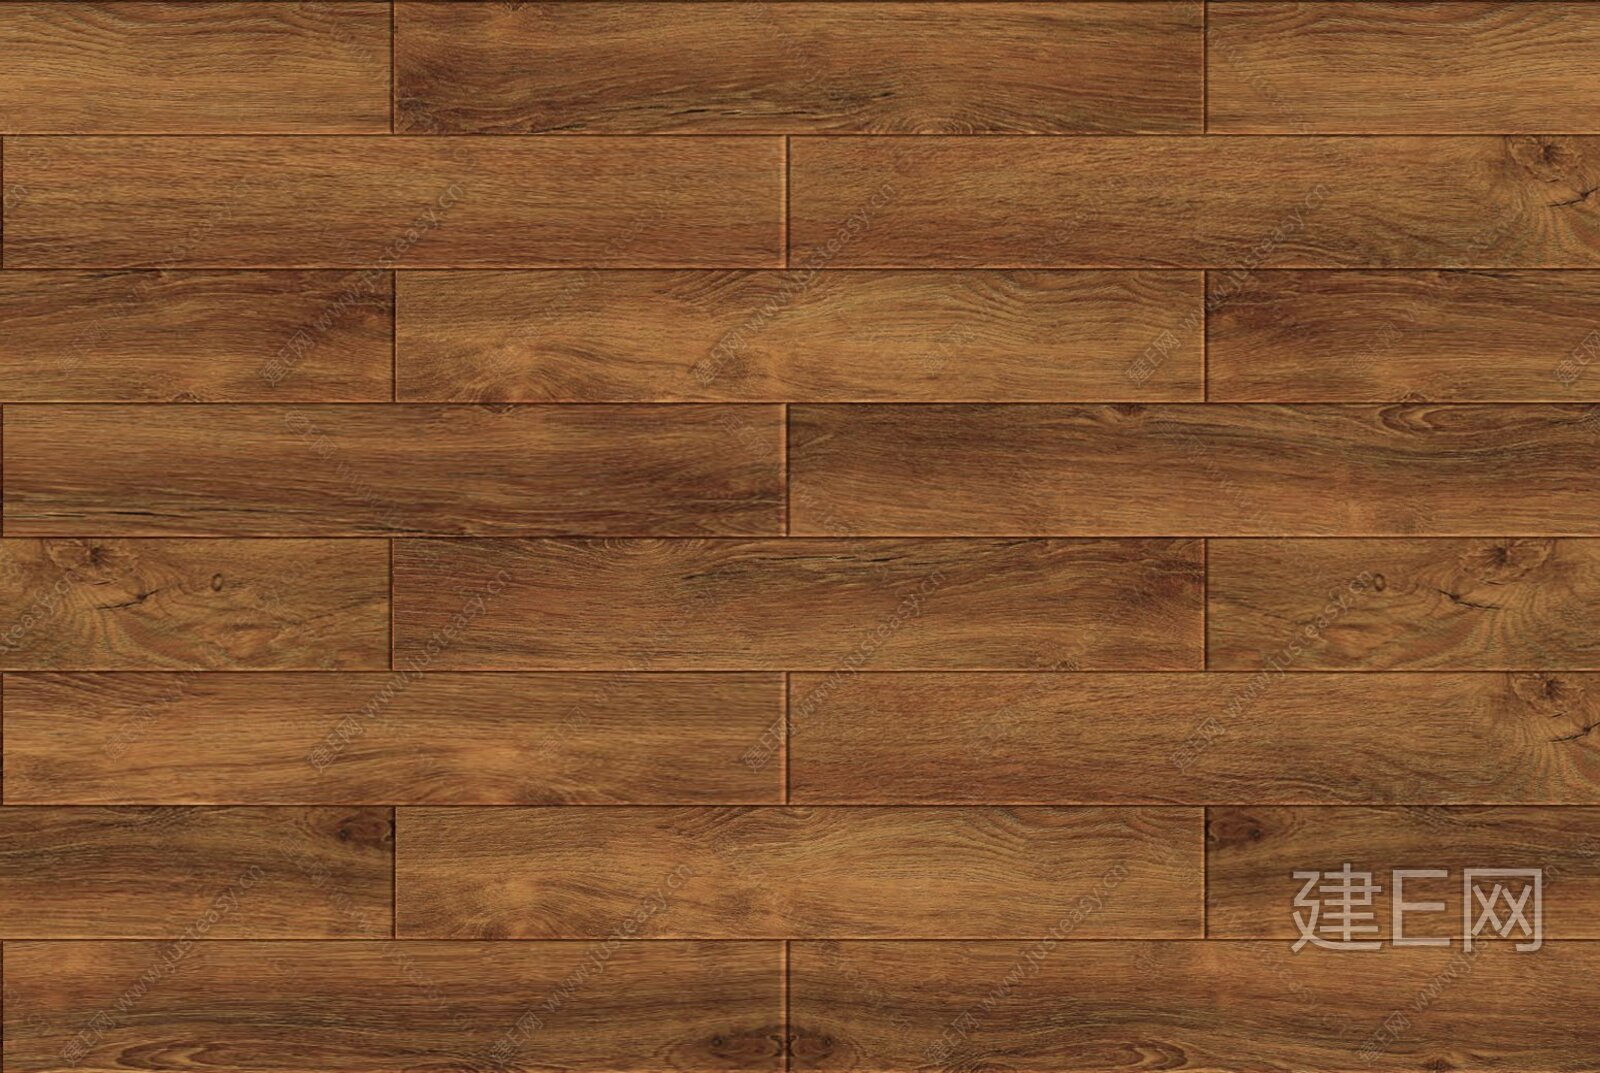 【3D贴图】木地板-3d材质贴图下载_贴图素材_3d贴图网 - 建E网3dmax材质库